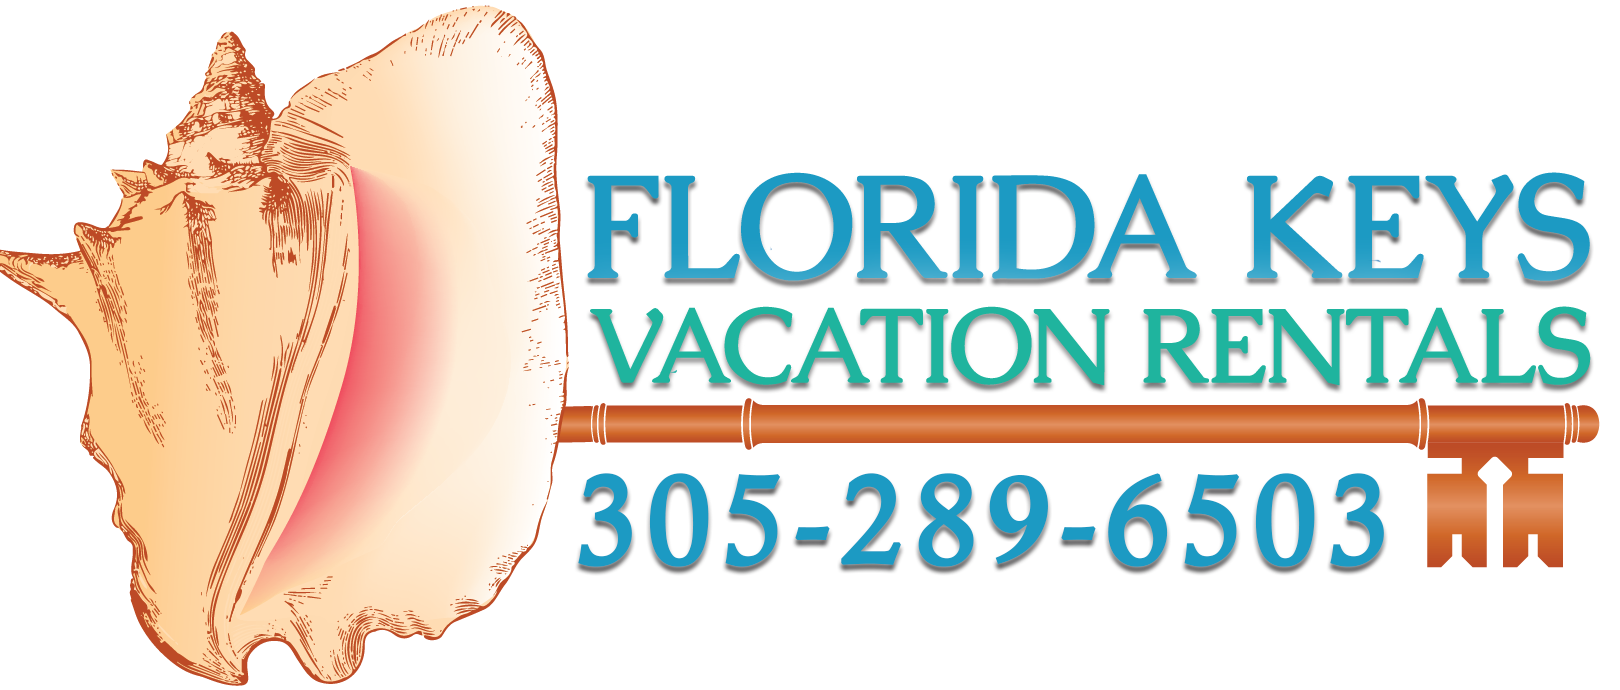 Florida Keys Vacation Rental Blog